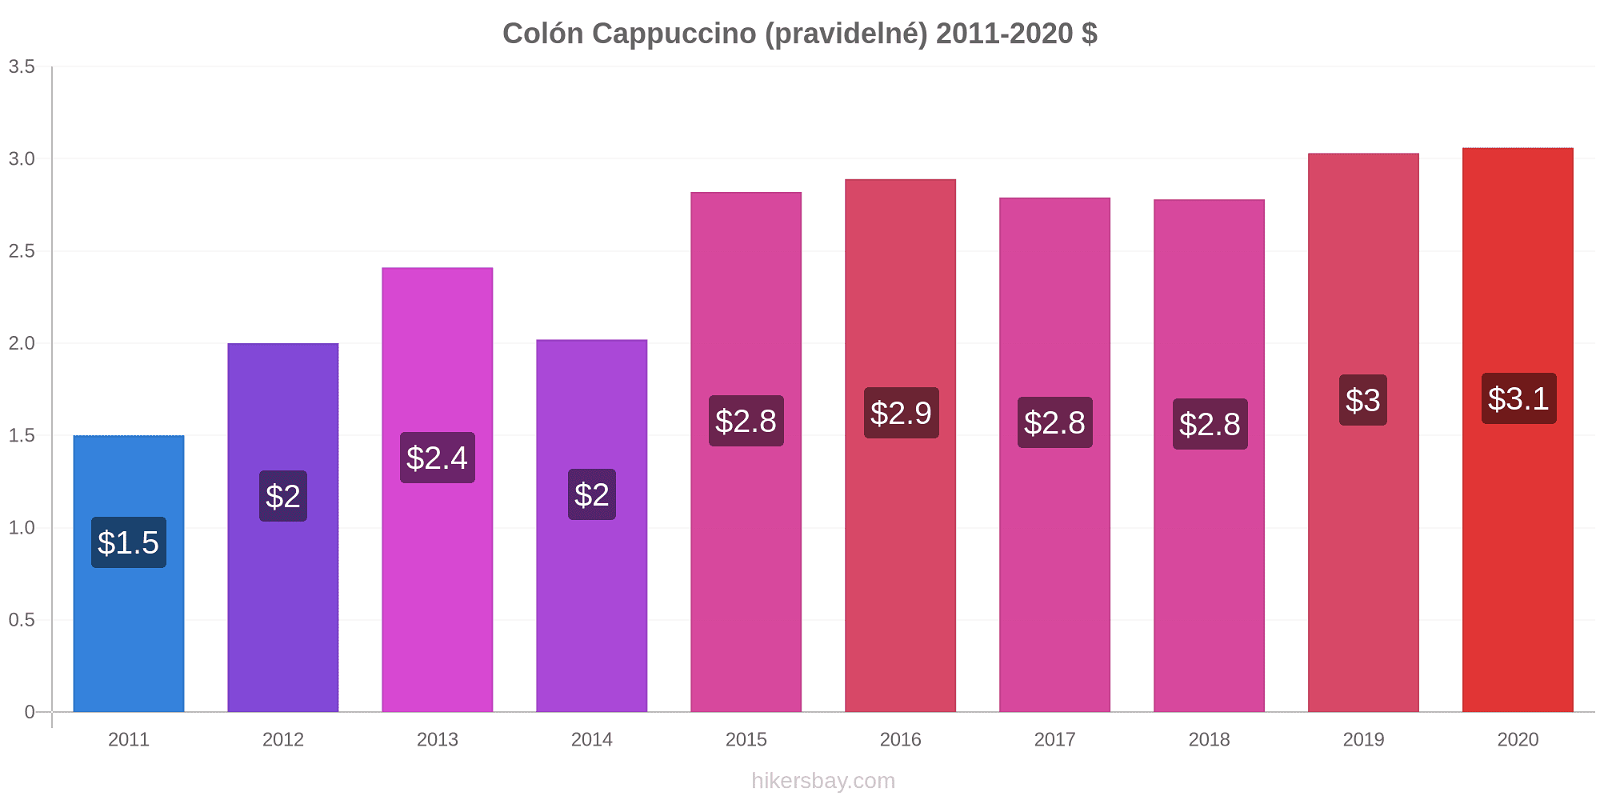 Colón změny cen Cappuccino (pravidelné) hikersbay.com